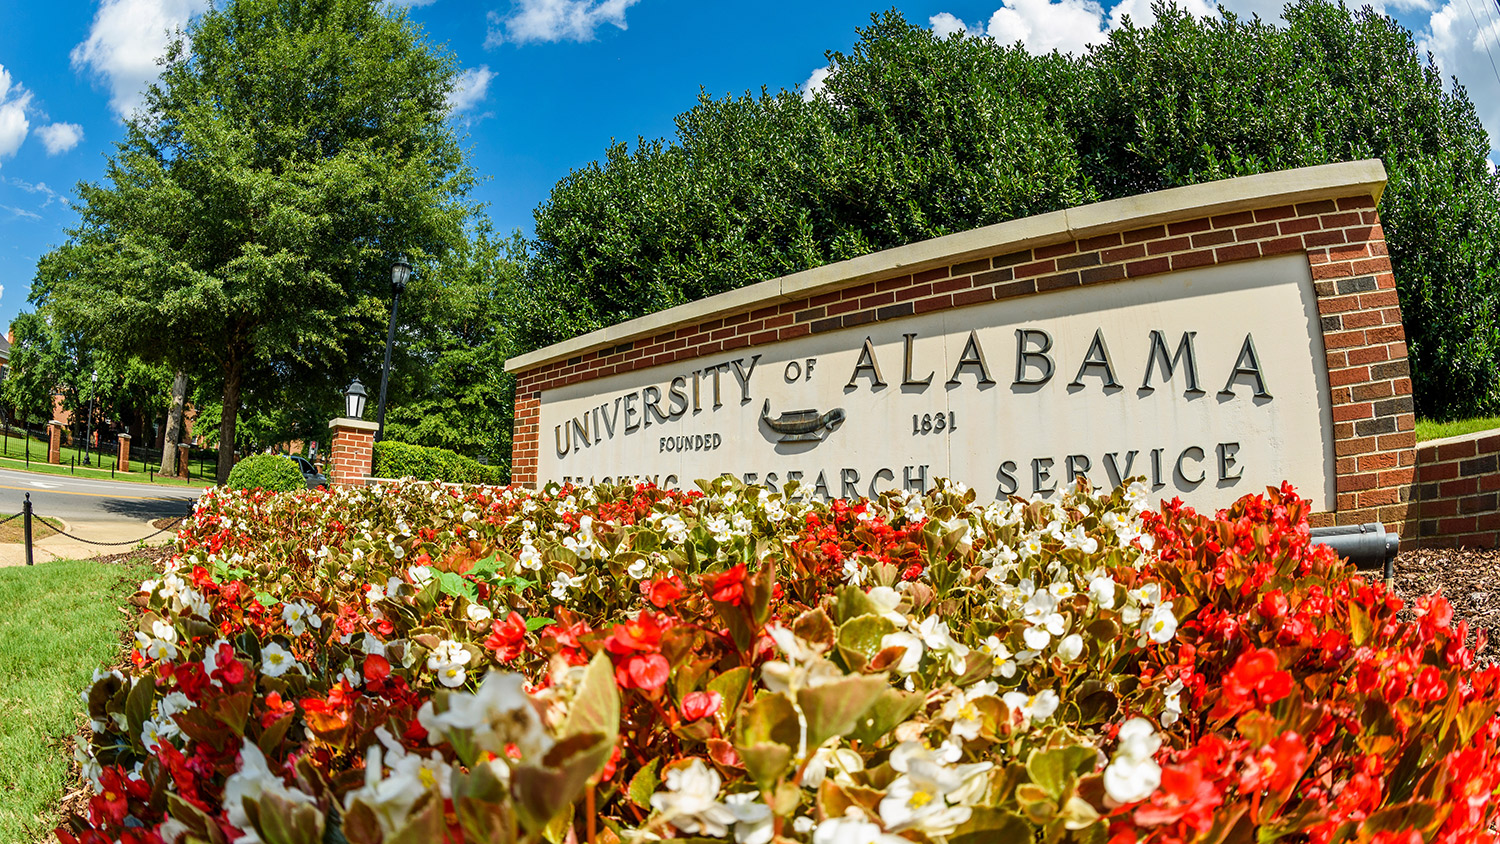 The University of Alabama sign